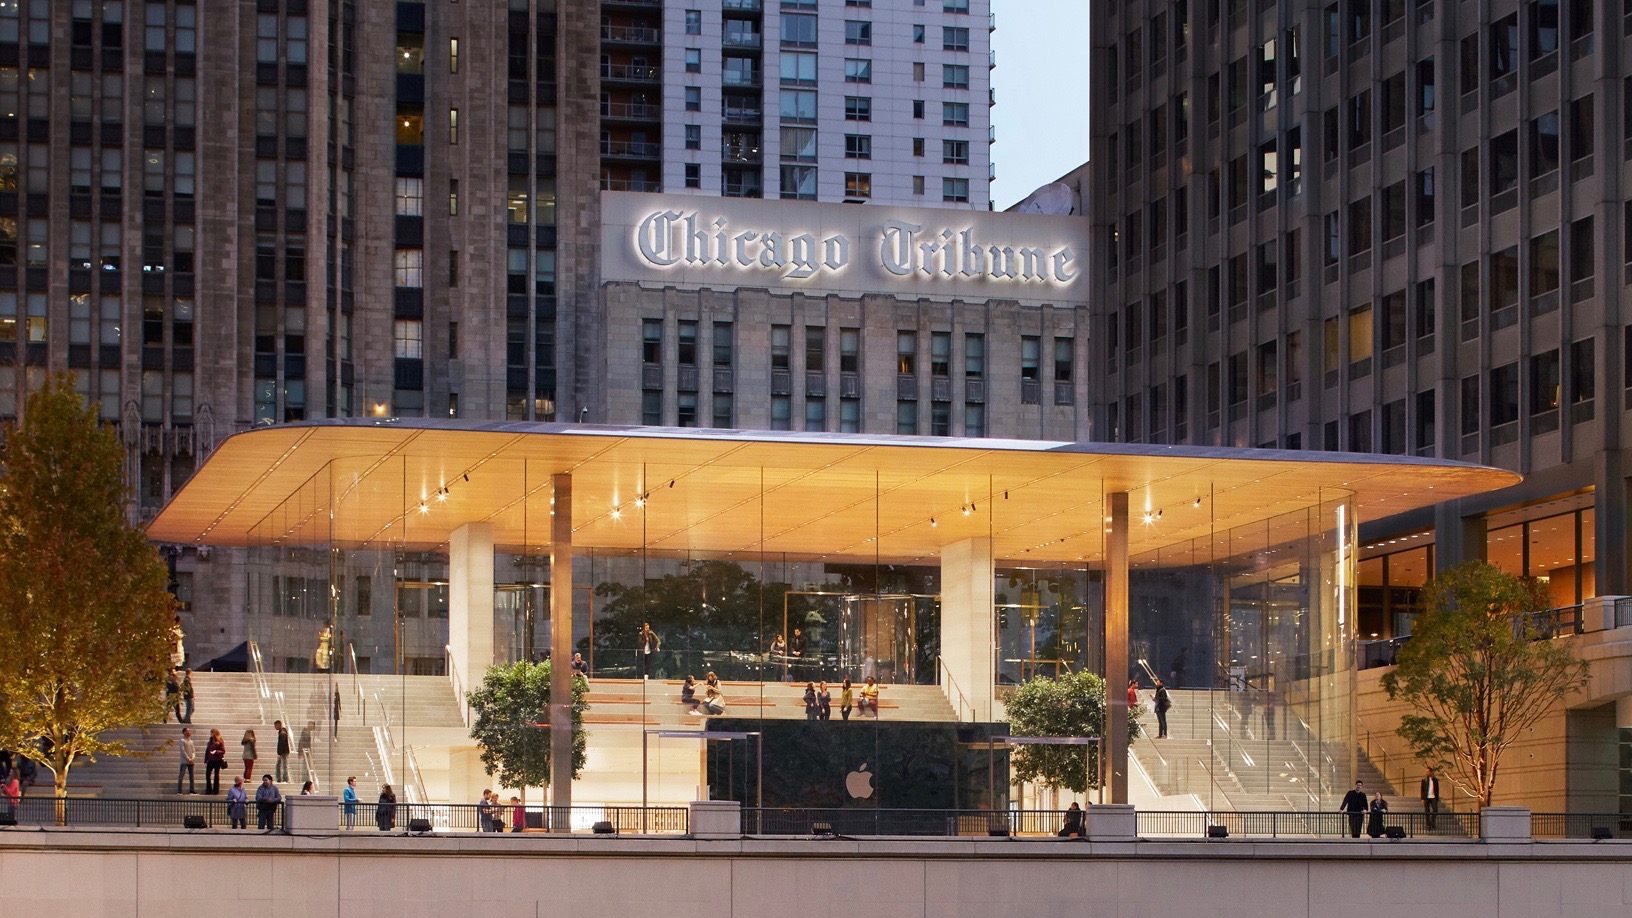 Walton Street values new Chicago Apple Store at $71 million